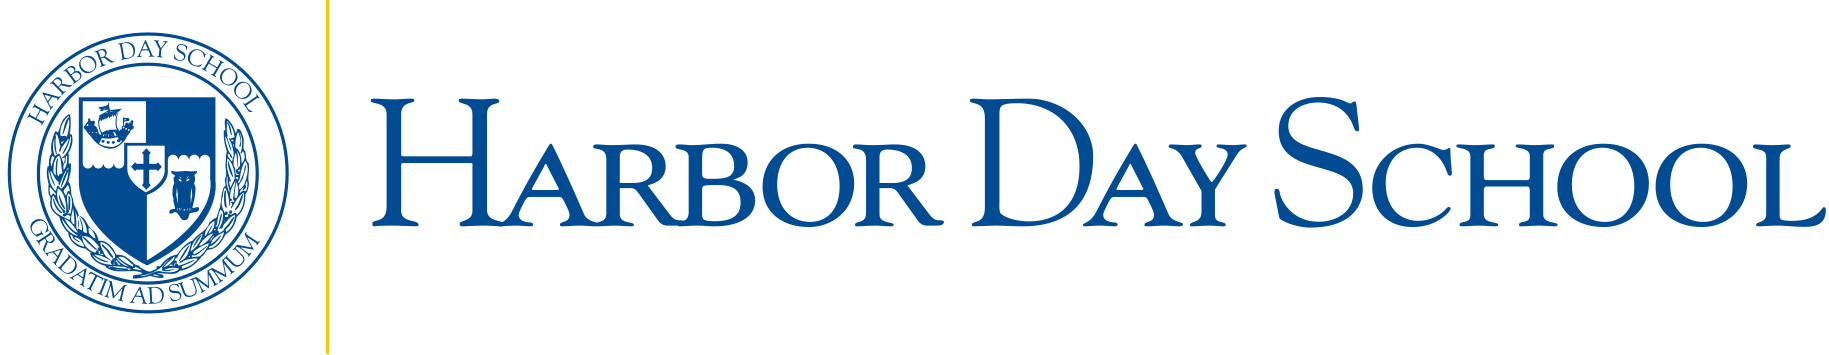 Harbor Day School logo